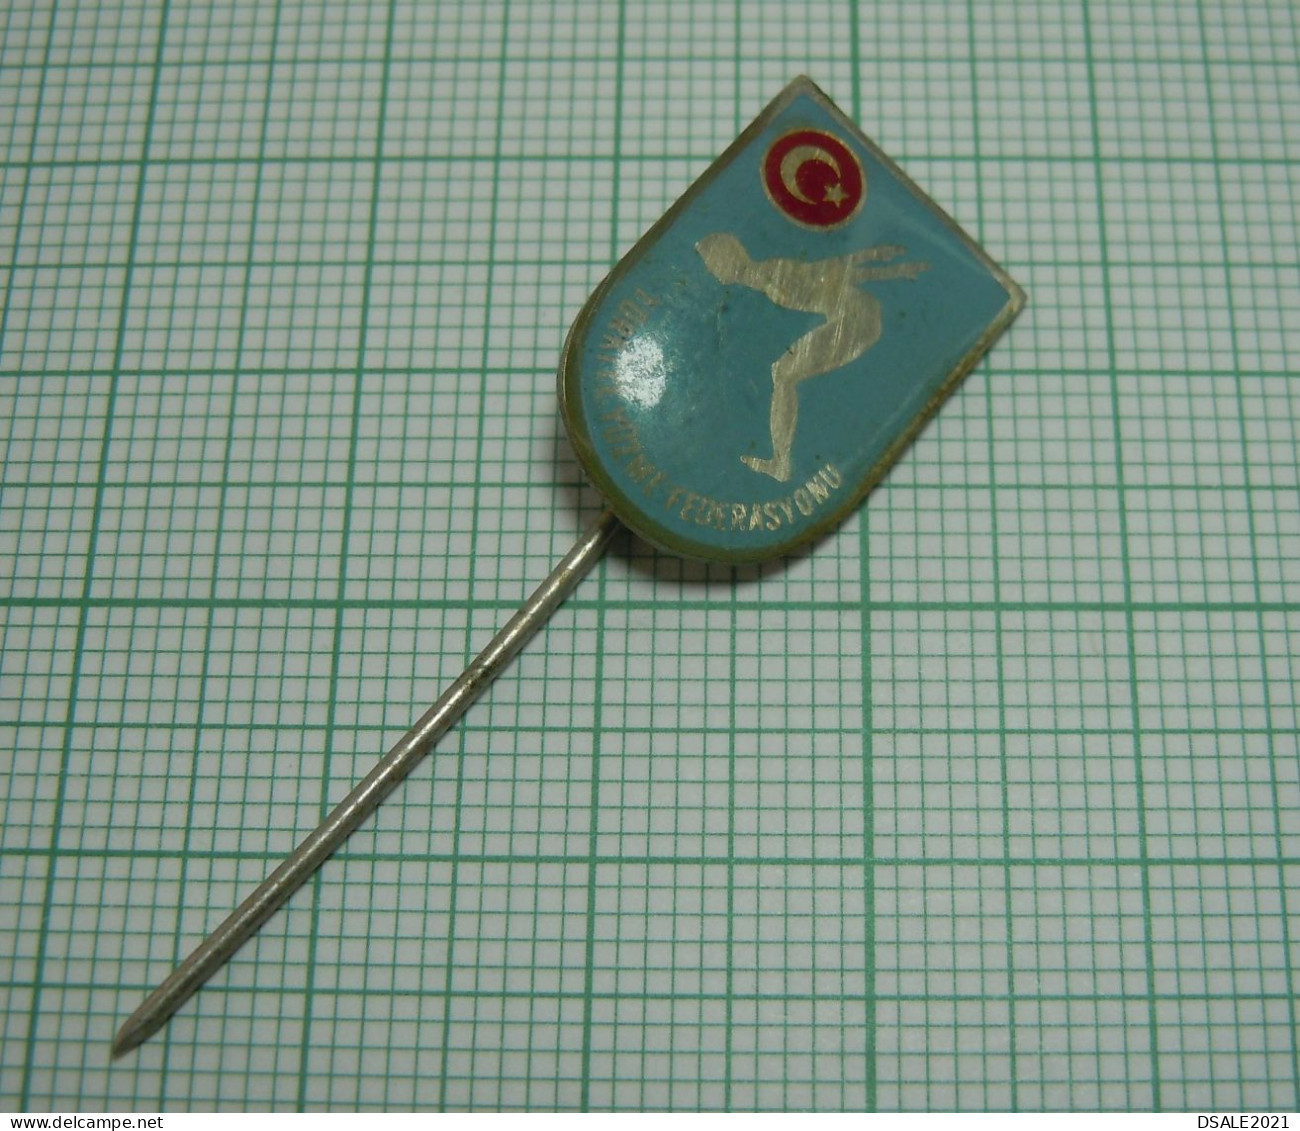 Turkey, Turkish Swimming Federation, TYF Türkiye Yüzme Federasyonu, Vintage Pin Badge, Abzeichen (ds1206) - Natation